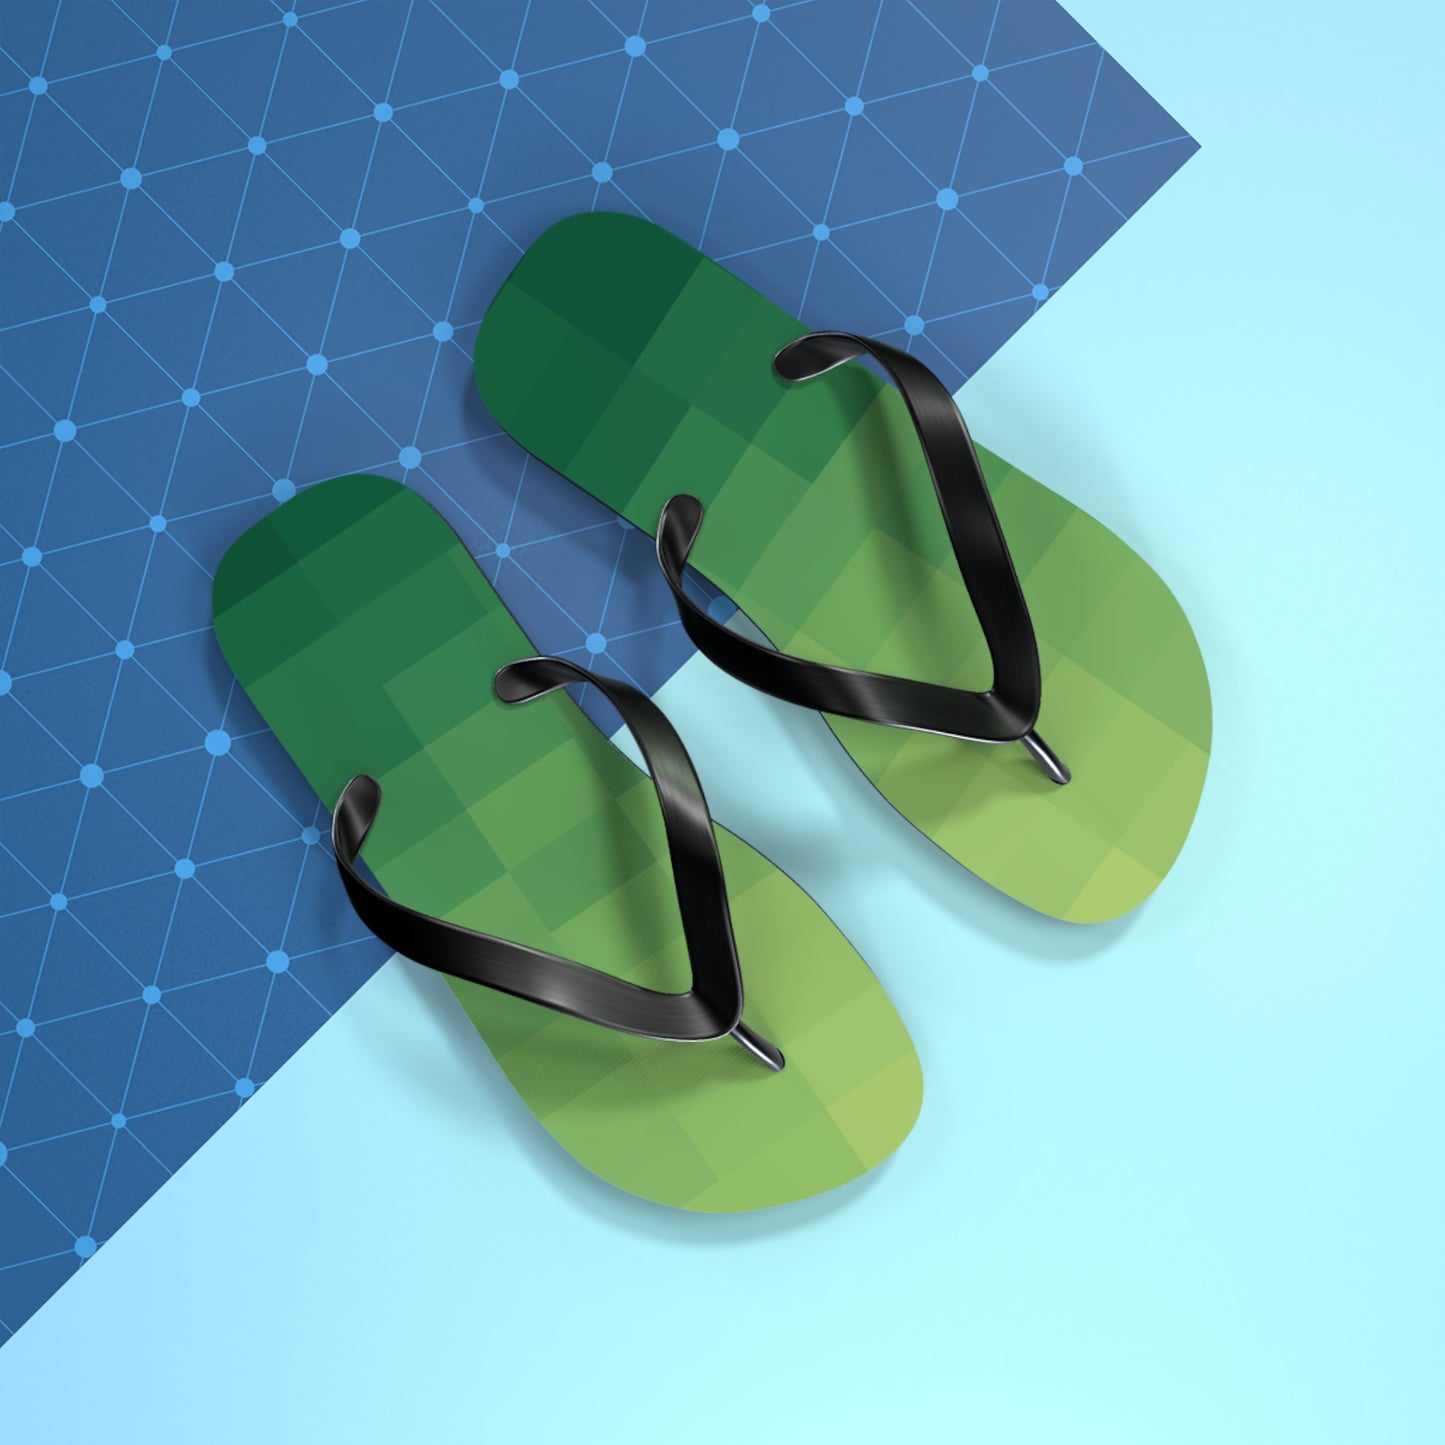 8-bit Green Flip Flops